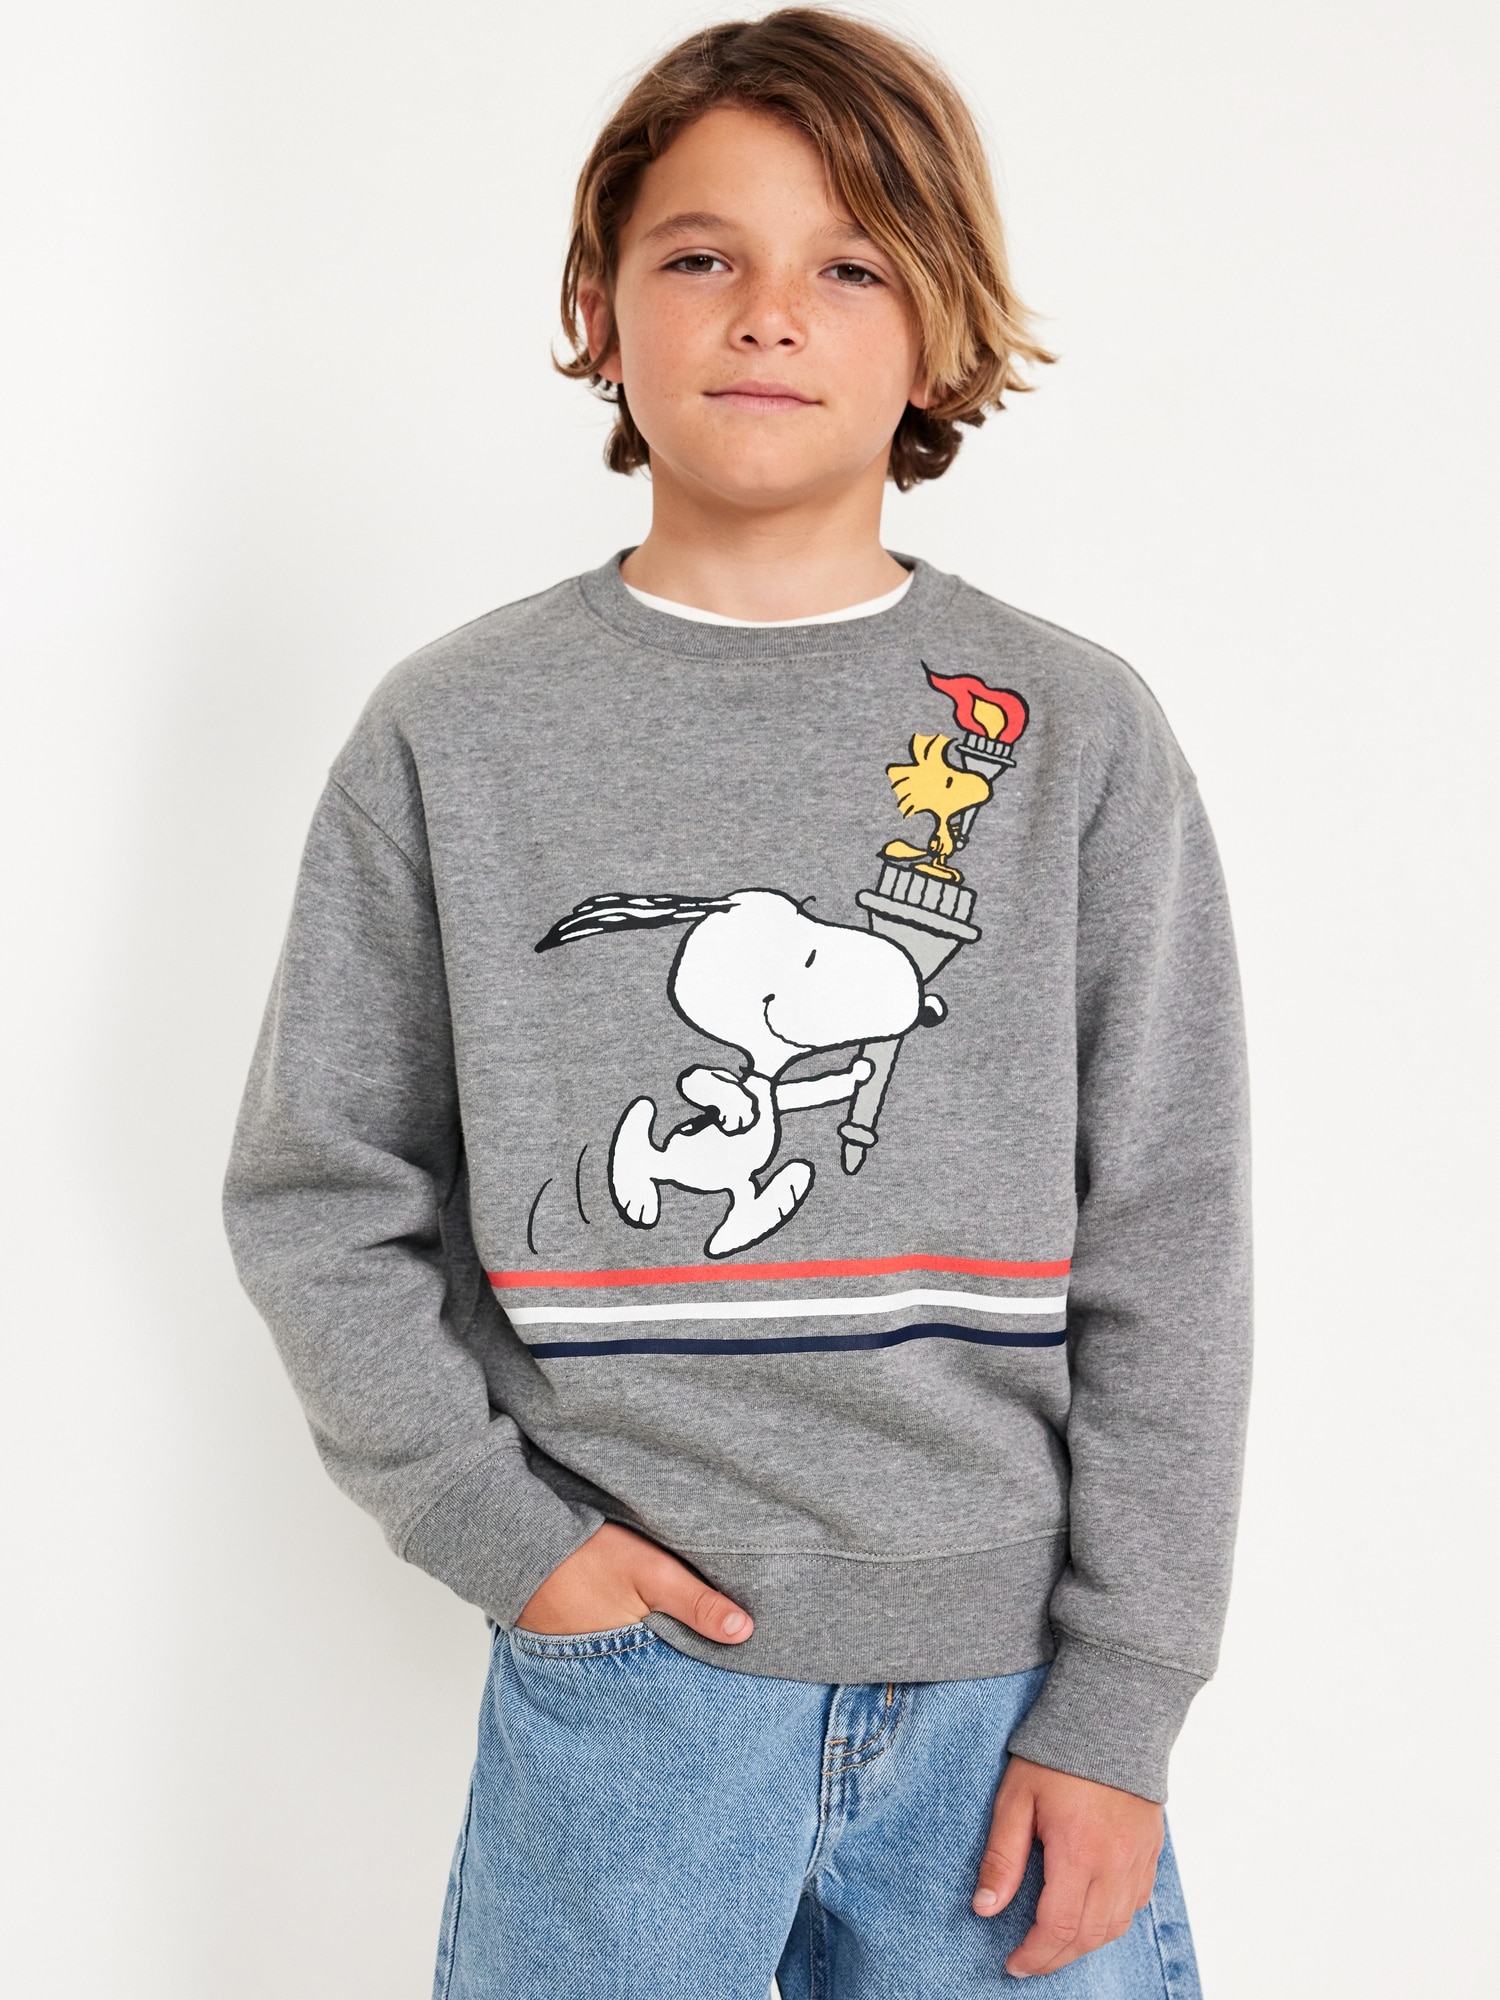 Peanuts™ Gender-Neutral Crew-Neck Sweatshirt for Kids